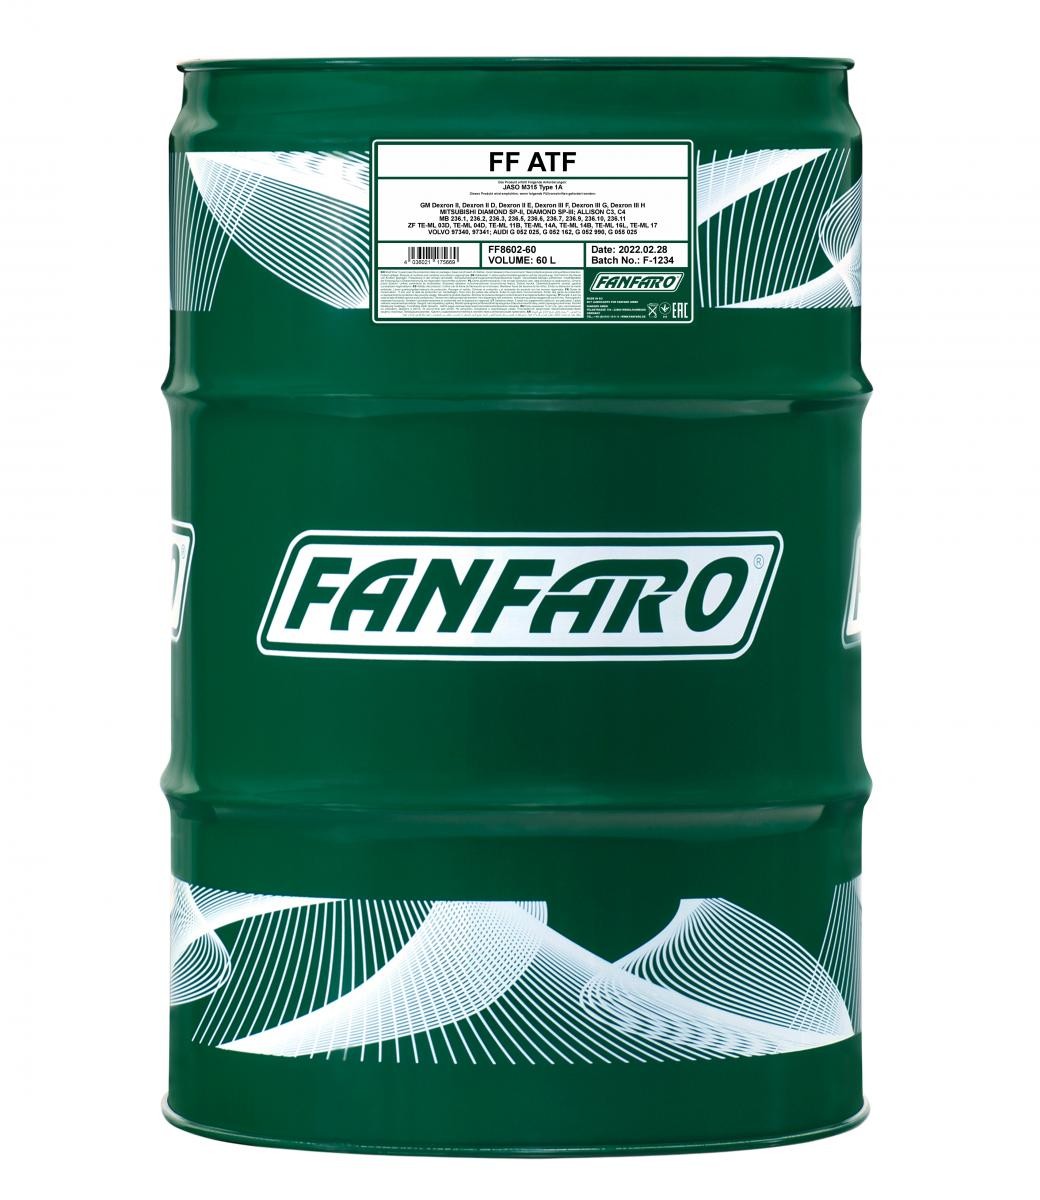 Original FF8602-60 FANFARO Manual transmission oil VOLVO